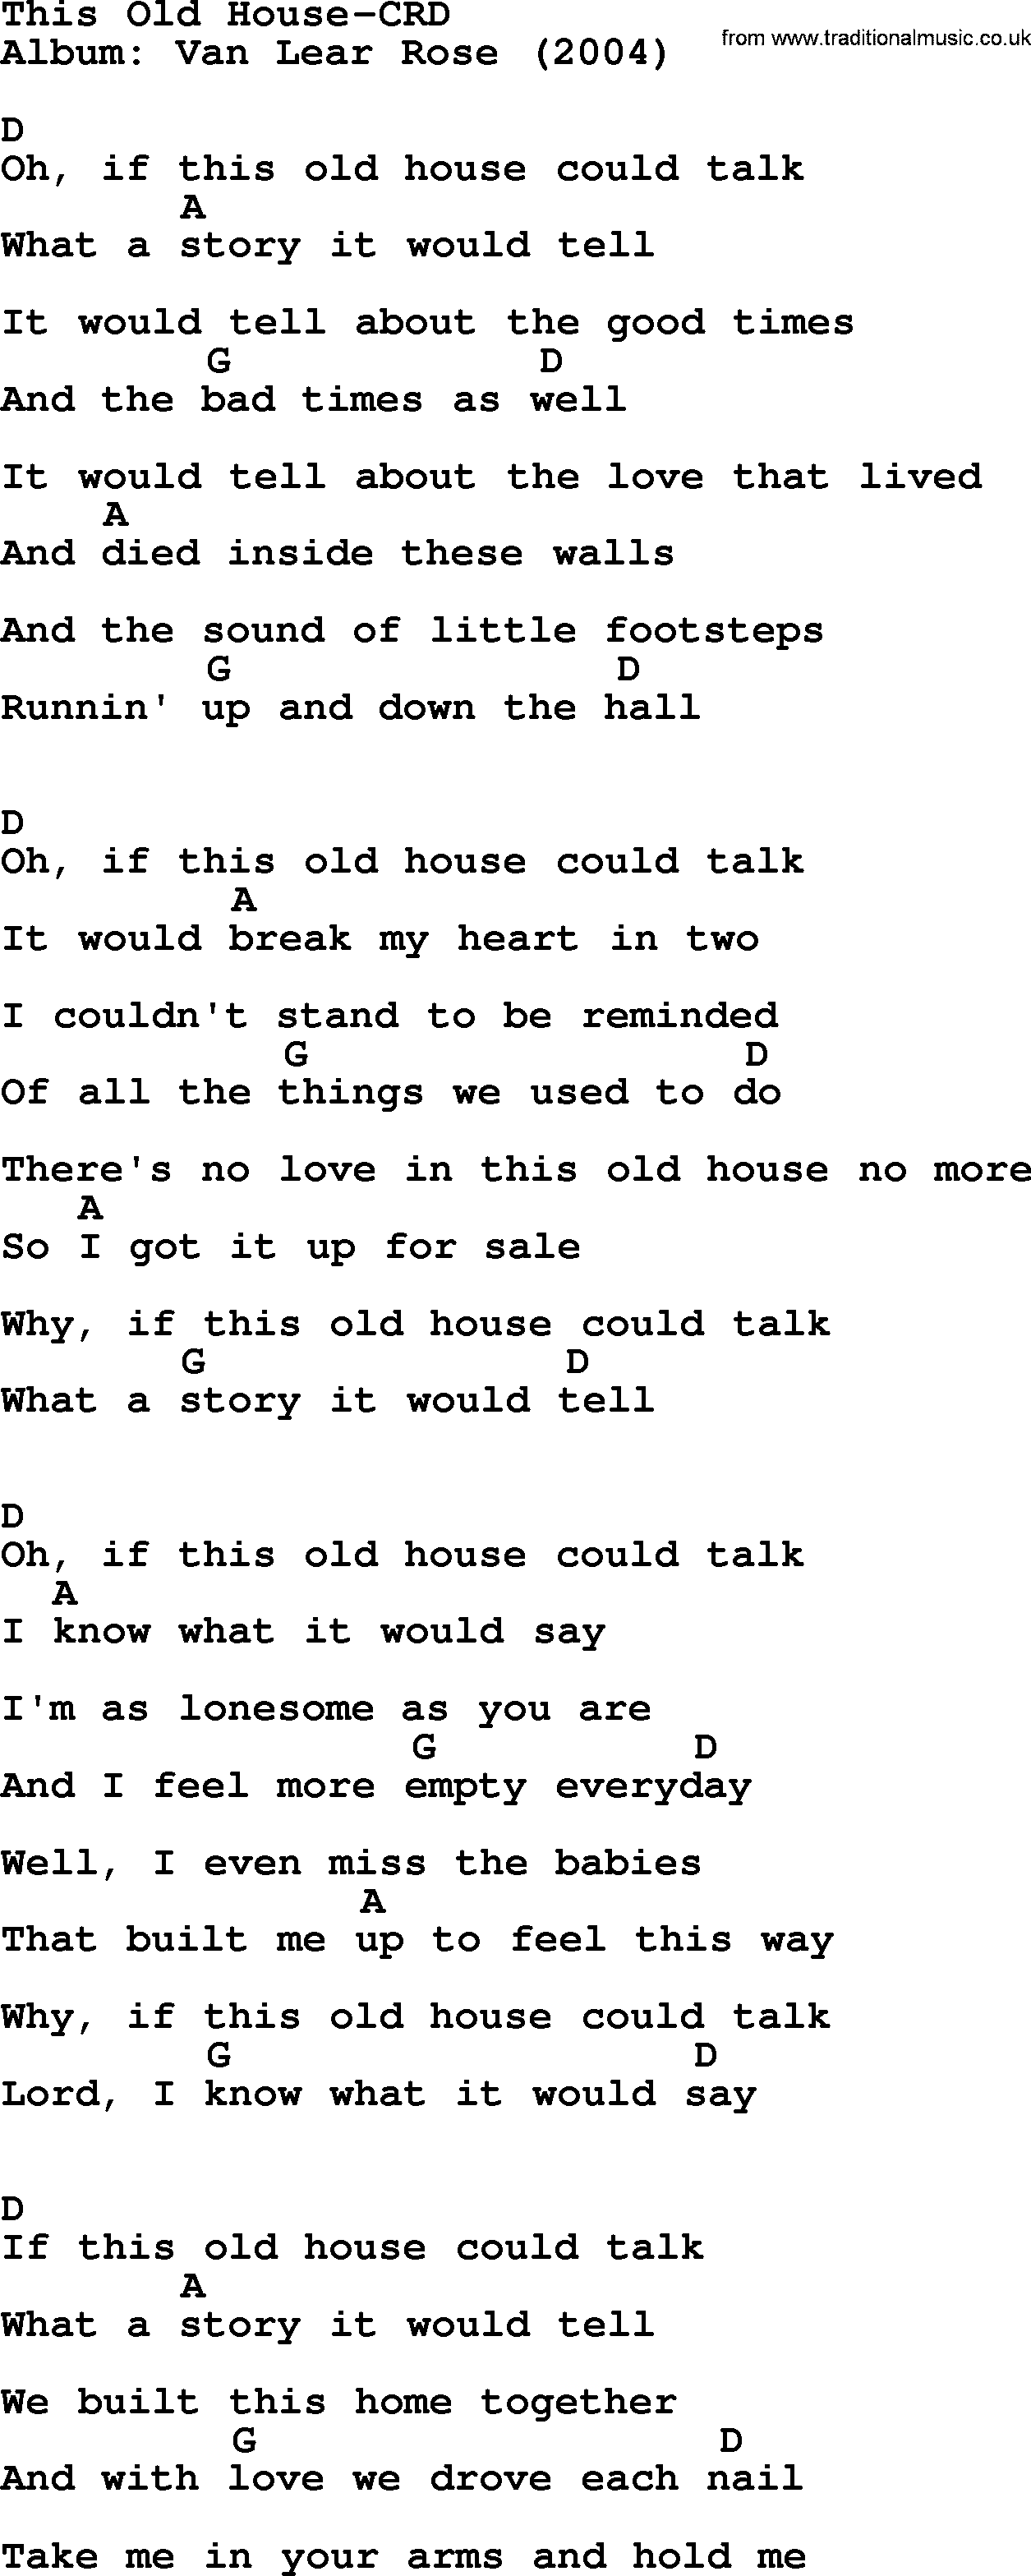 Loretta Lynn song: This Old House lyrics and chords